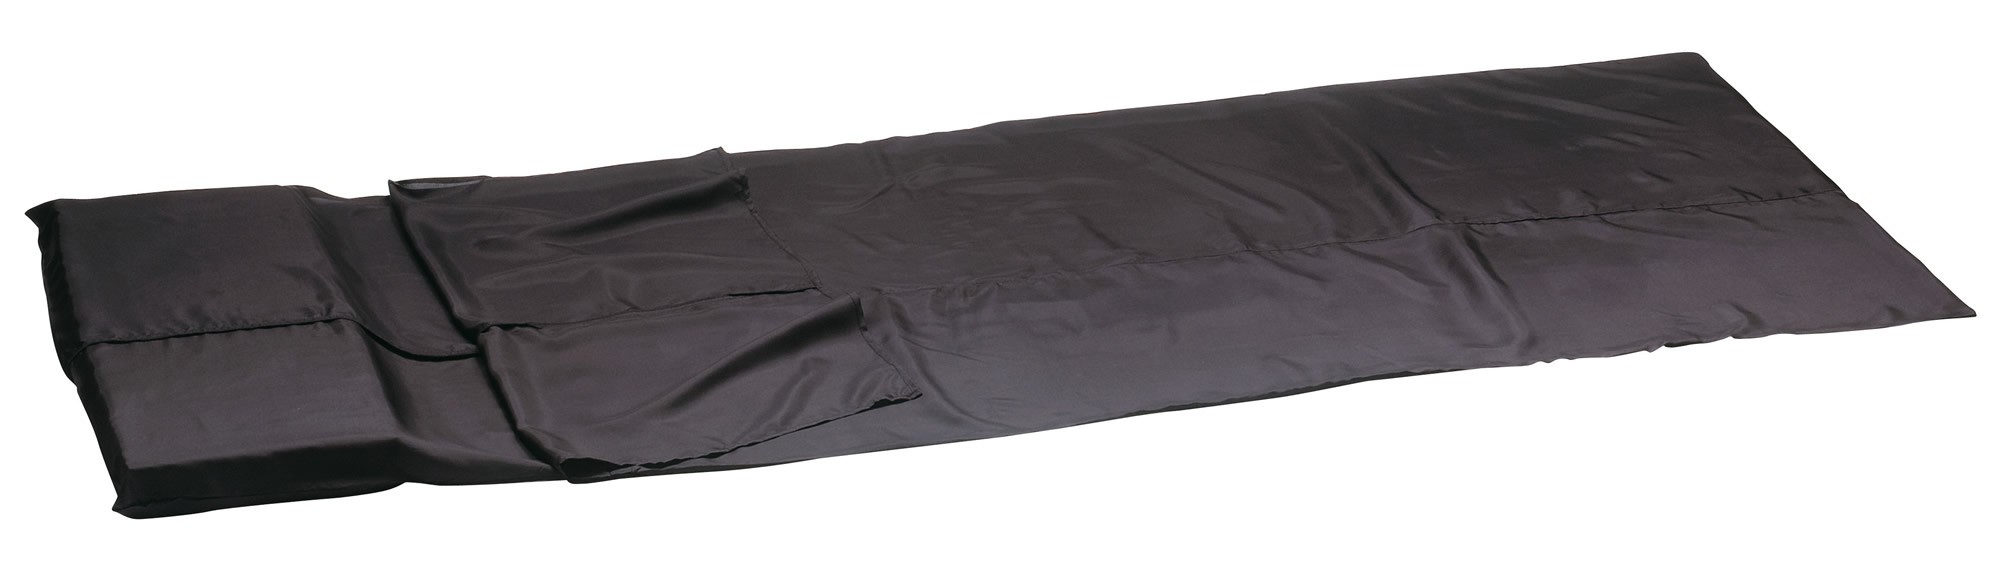 Camp Lining Silk - Drap de sac de couchage